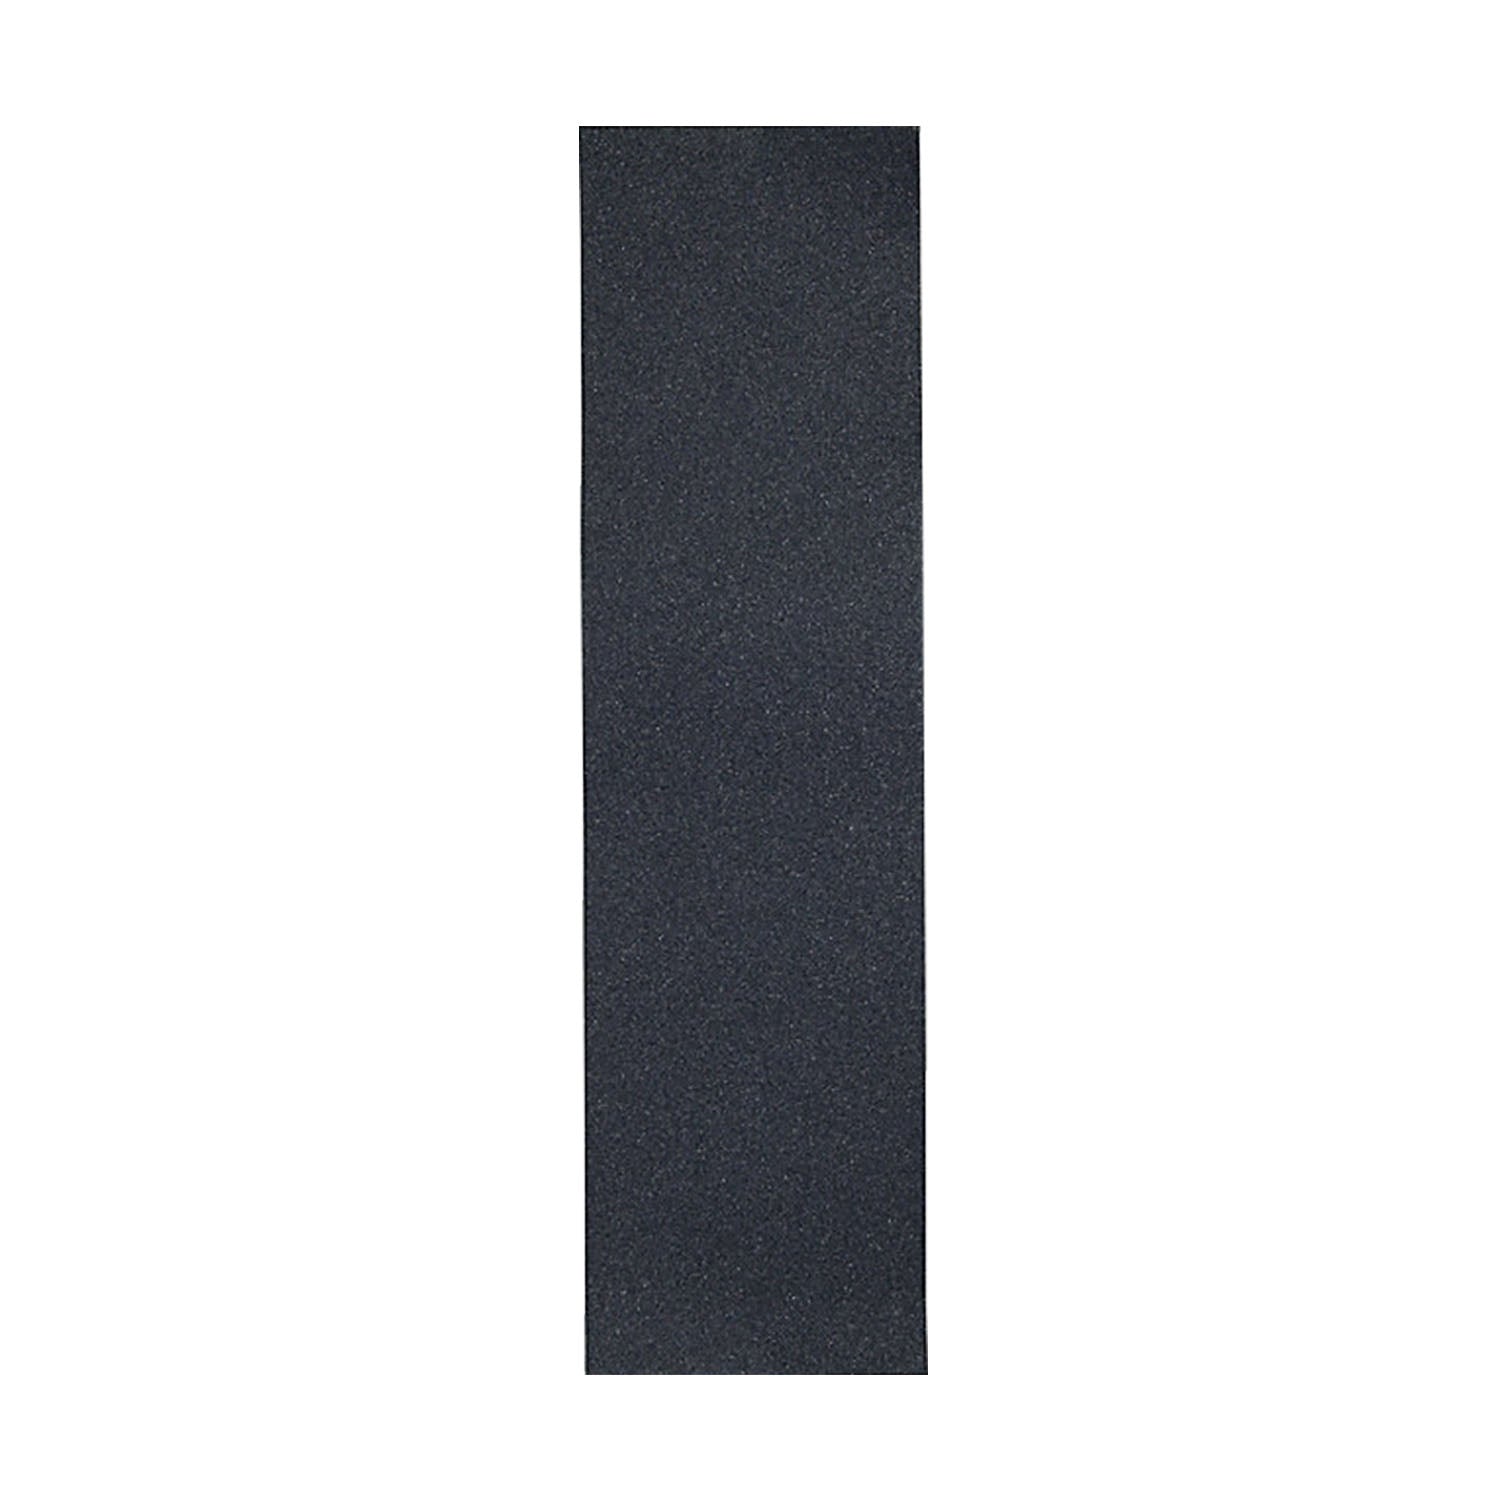 Perforated Grip Tape, Black